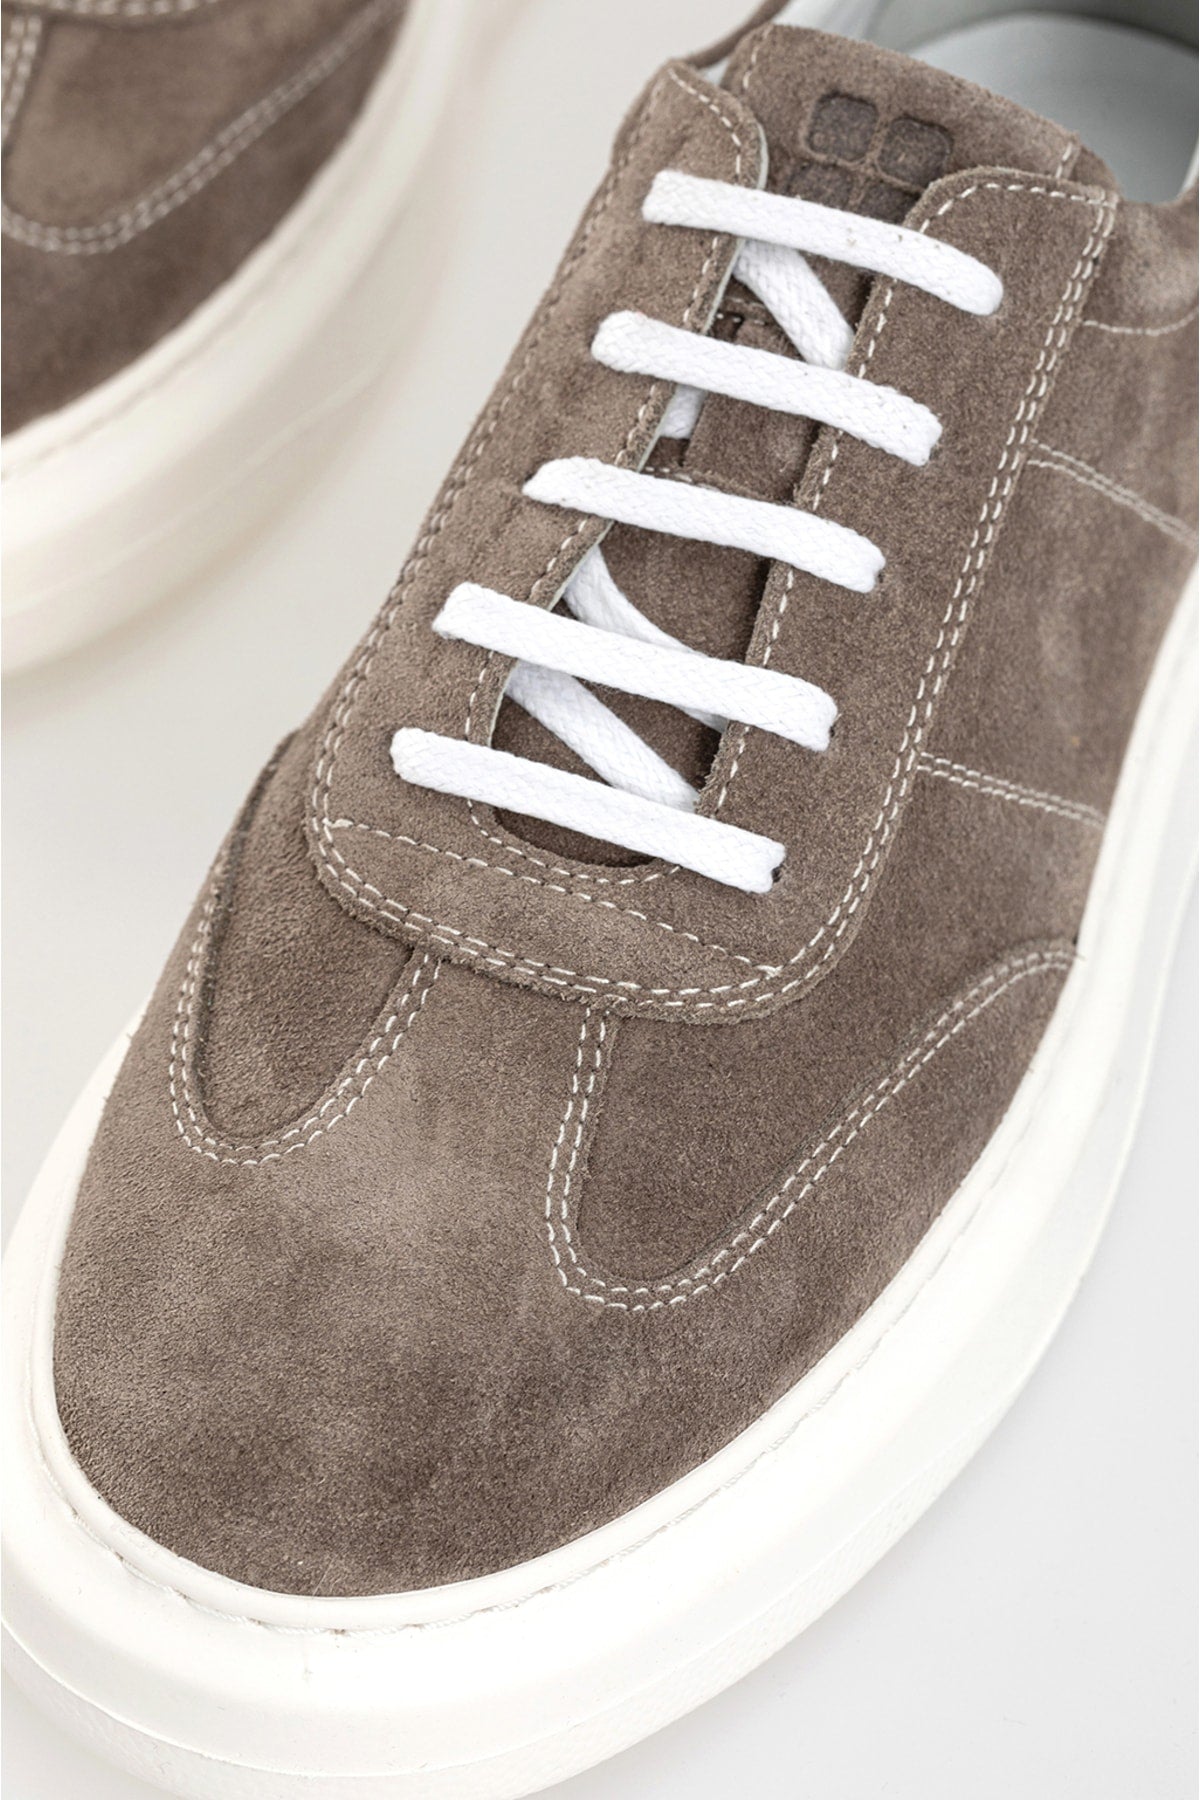 Men's Gray 100 %Süet Leather Sneaker Shoes A31y8021